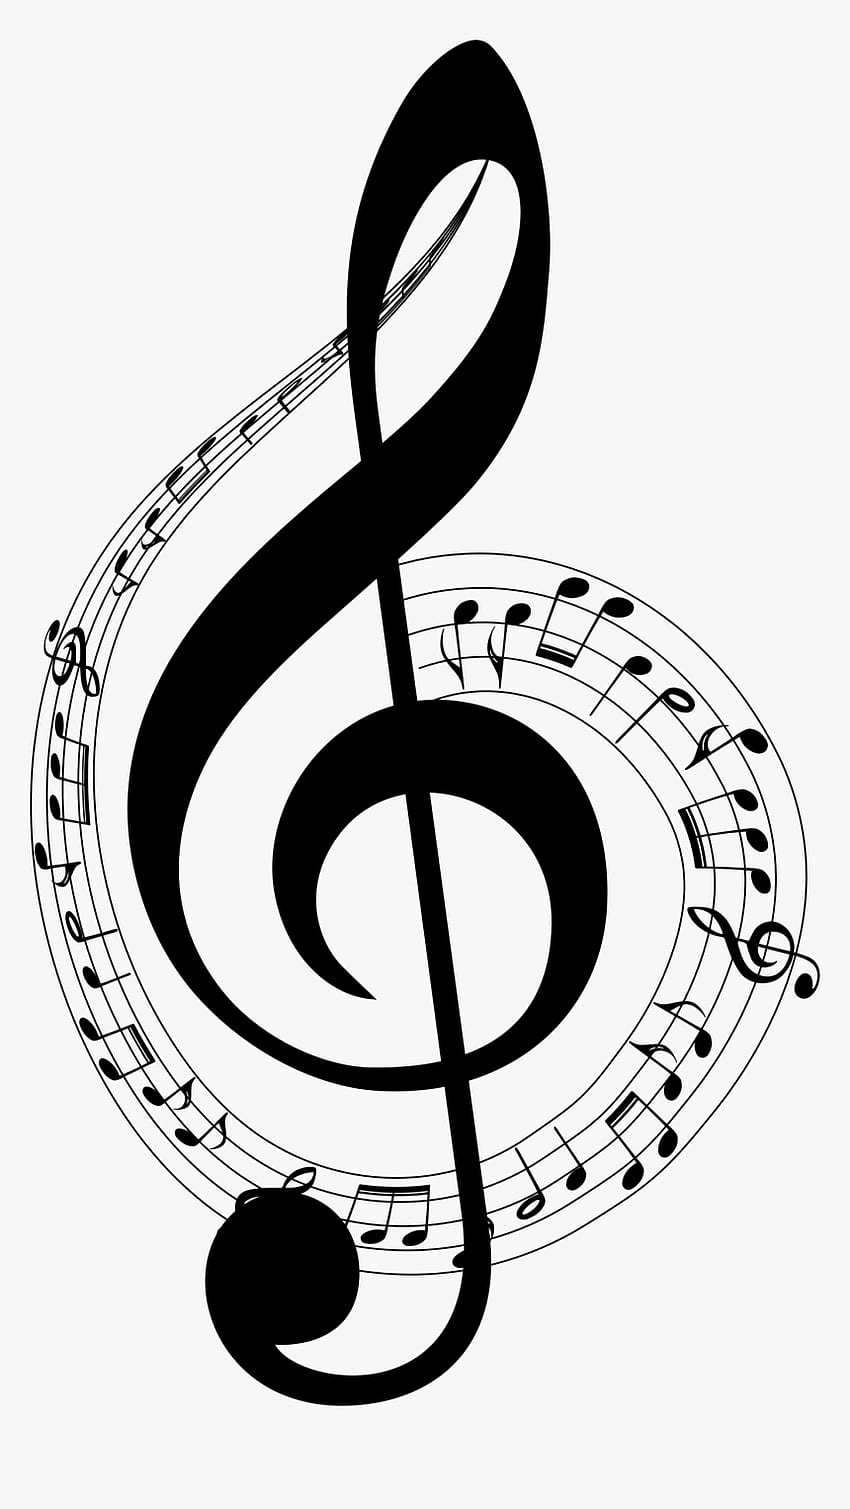 Tipografi Catatan Musik - Catatan Musik Latar Belakang Transparan ,, Simbol Musik wallpaper ponsel HD